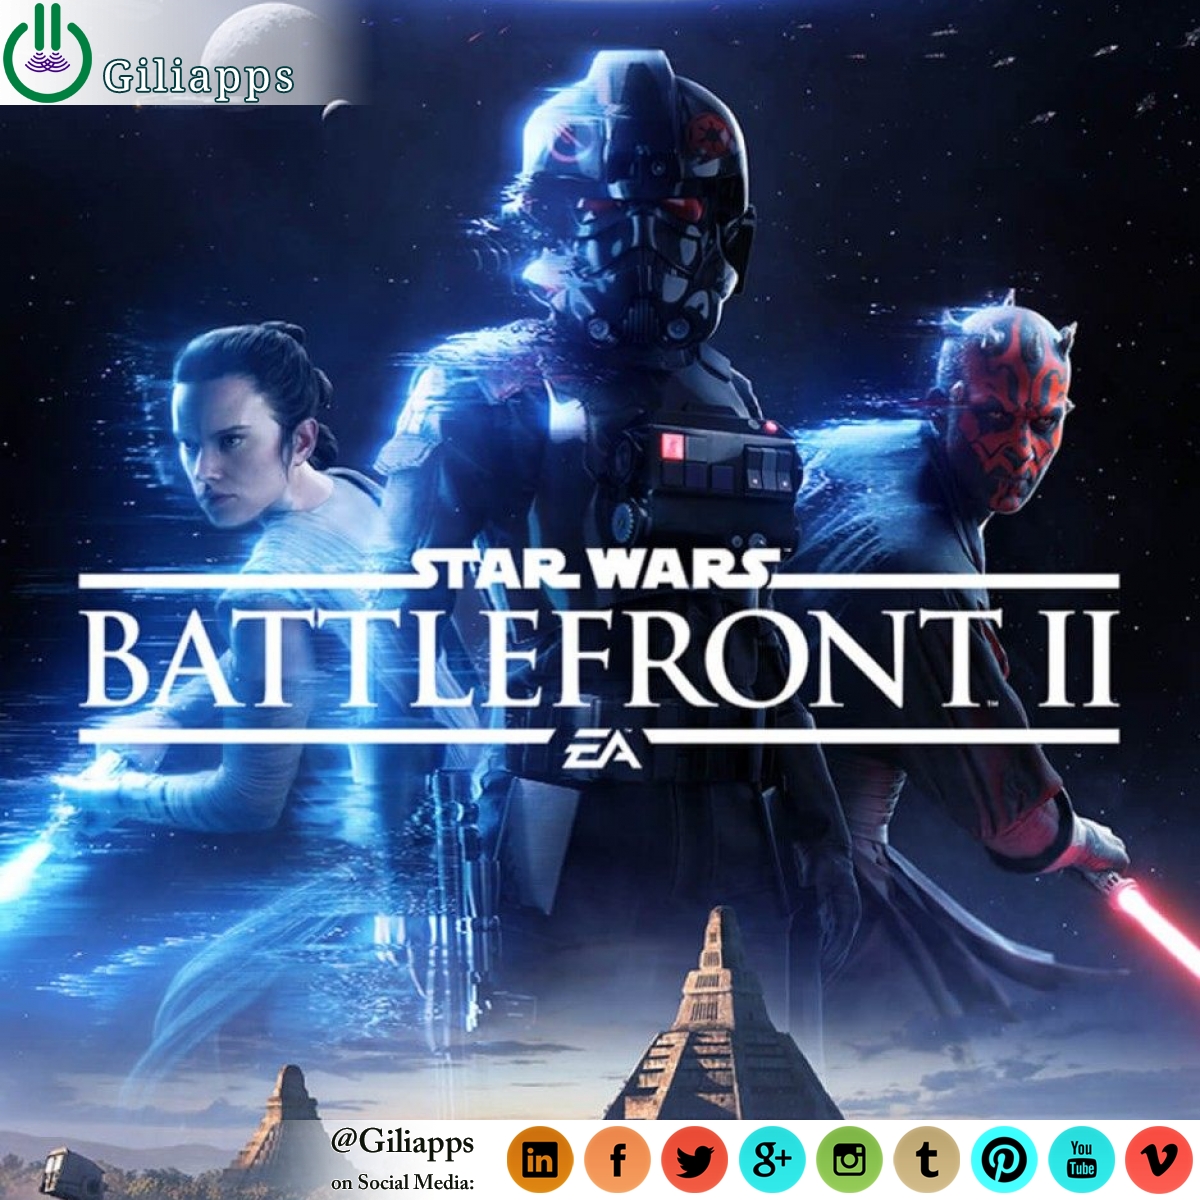 Star Wars Battlefront II will release on 17 Nov 2017